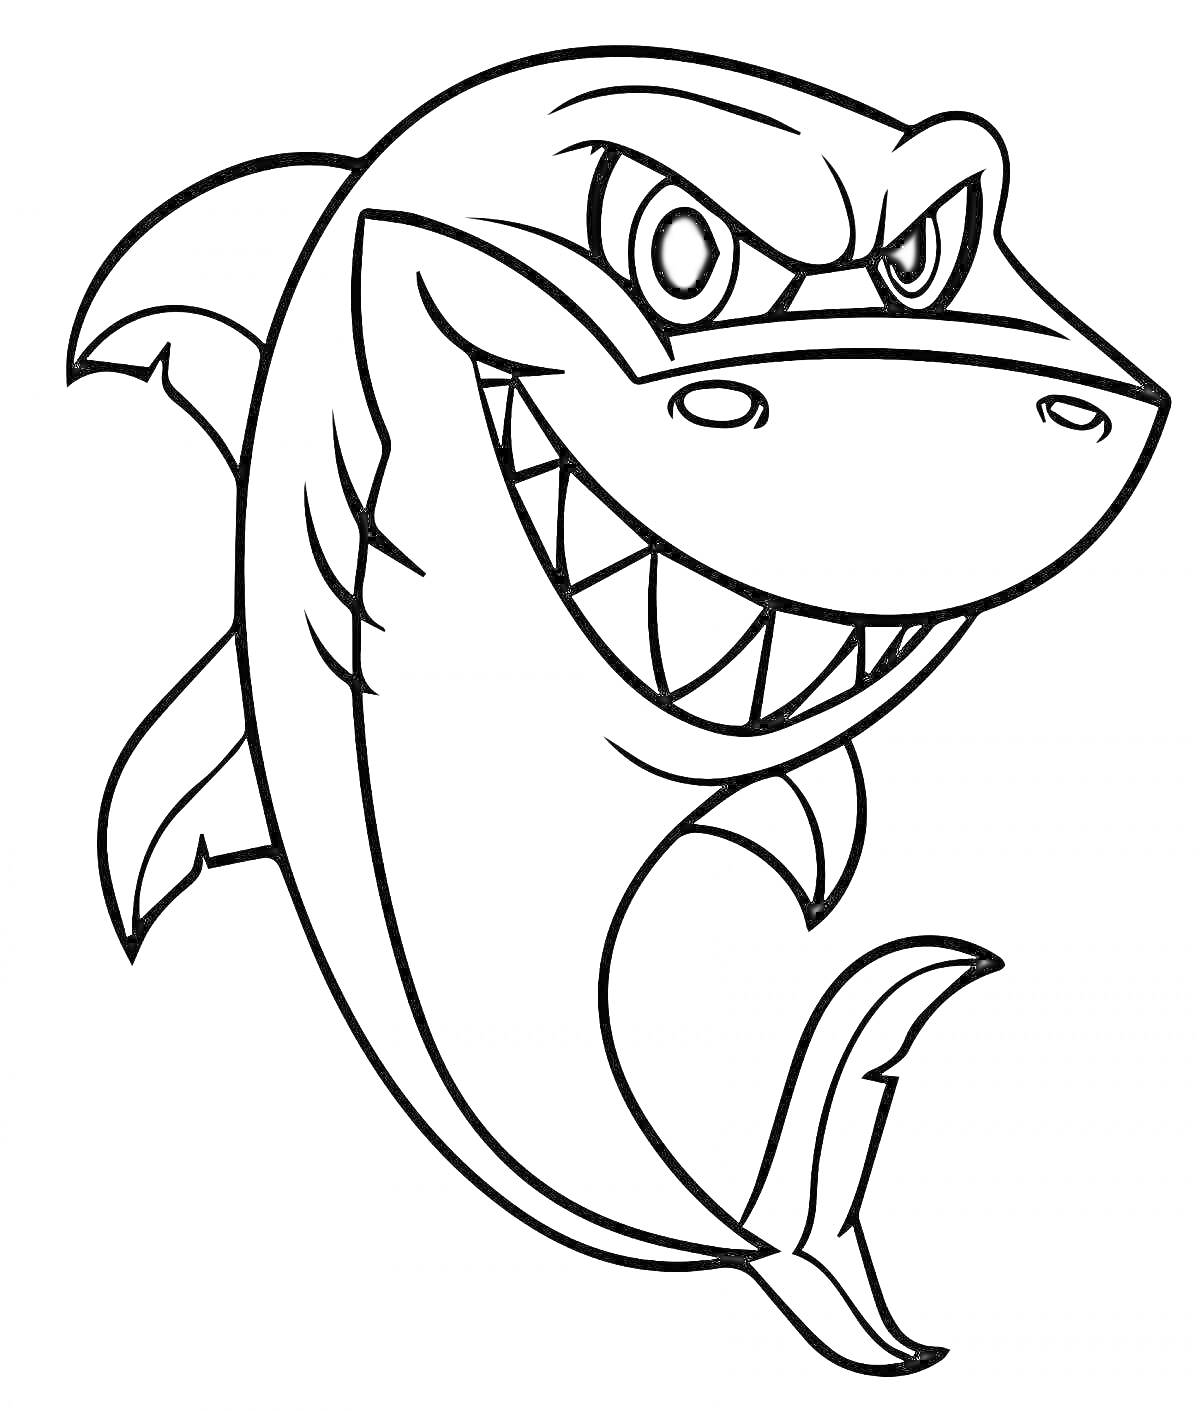 Раскраска улыбающийся акуленок с зубастой улыбкой